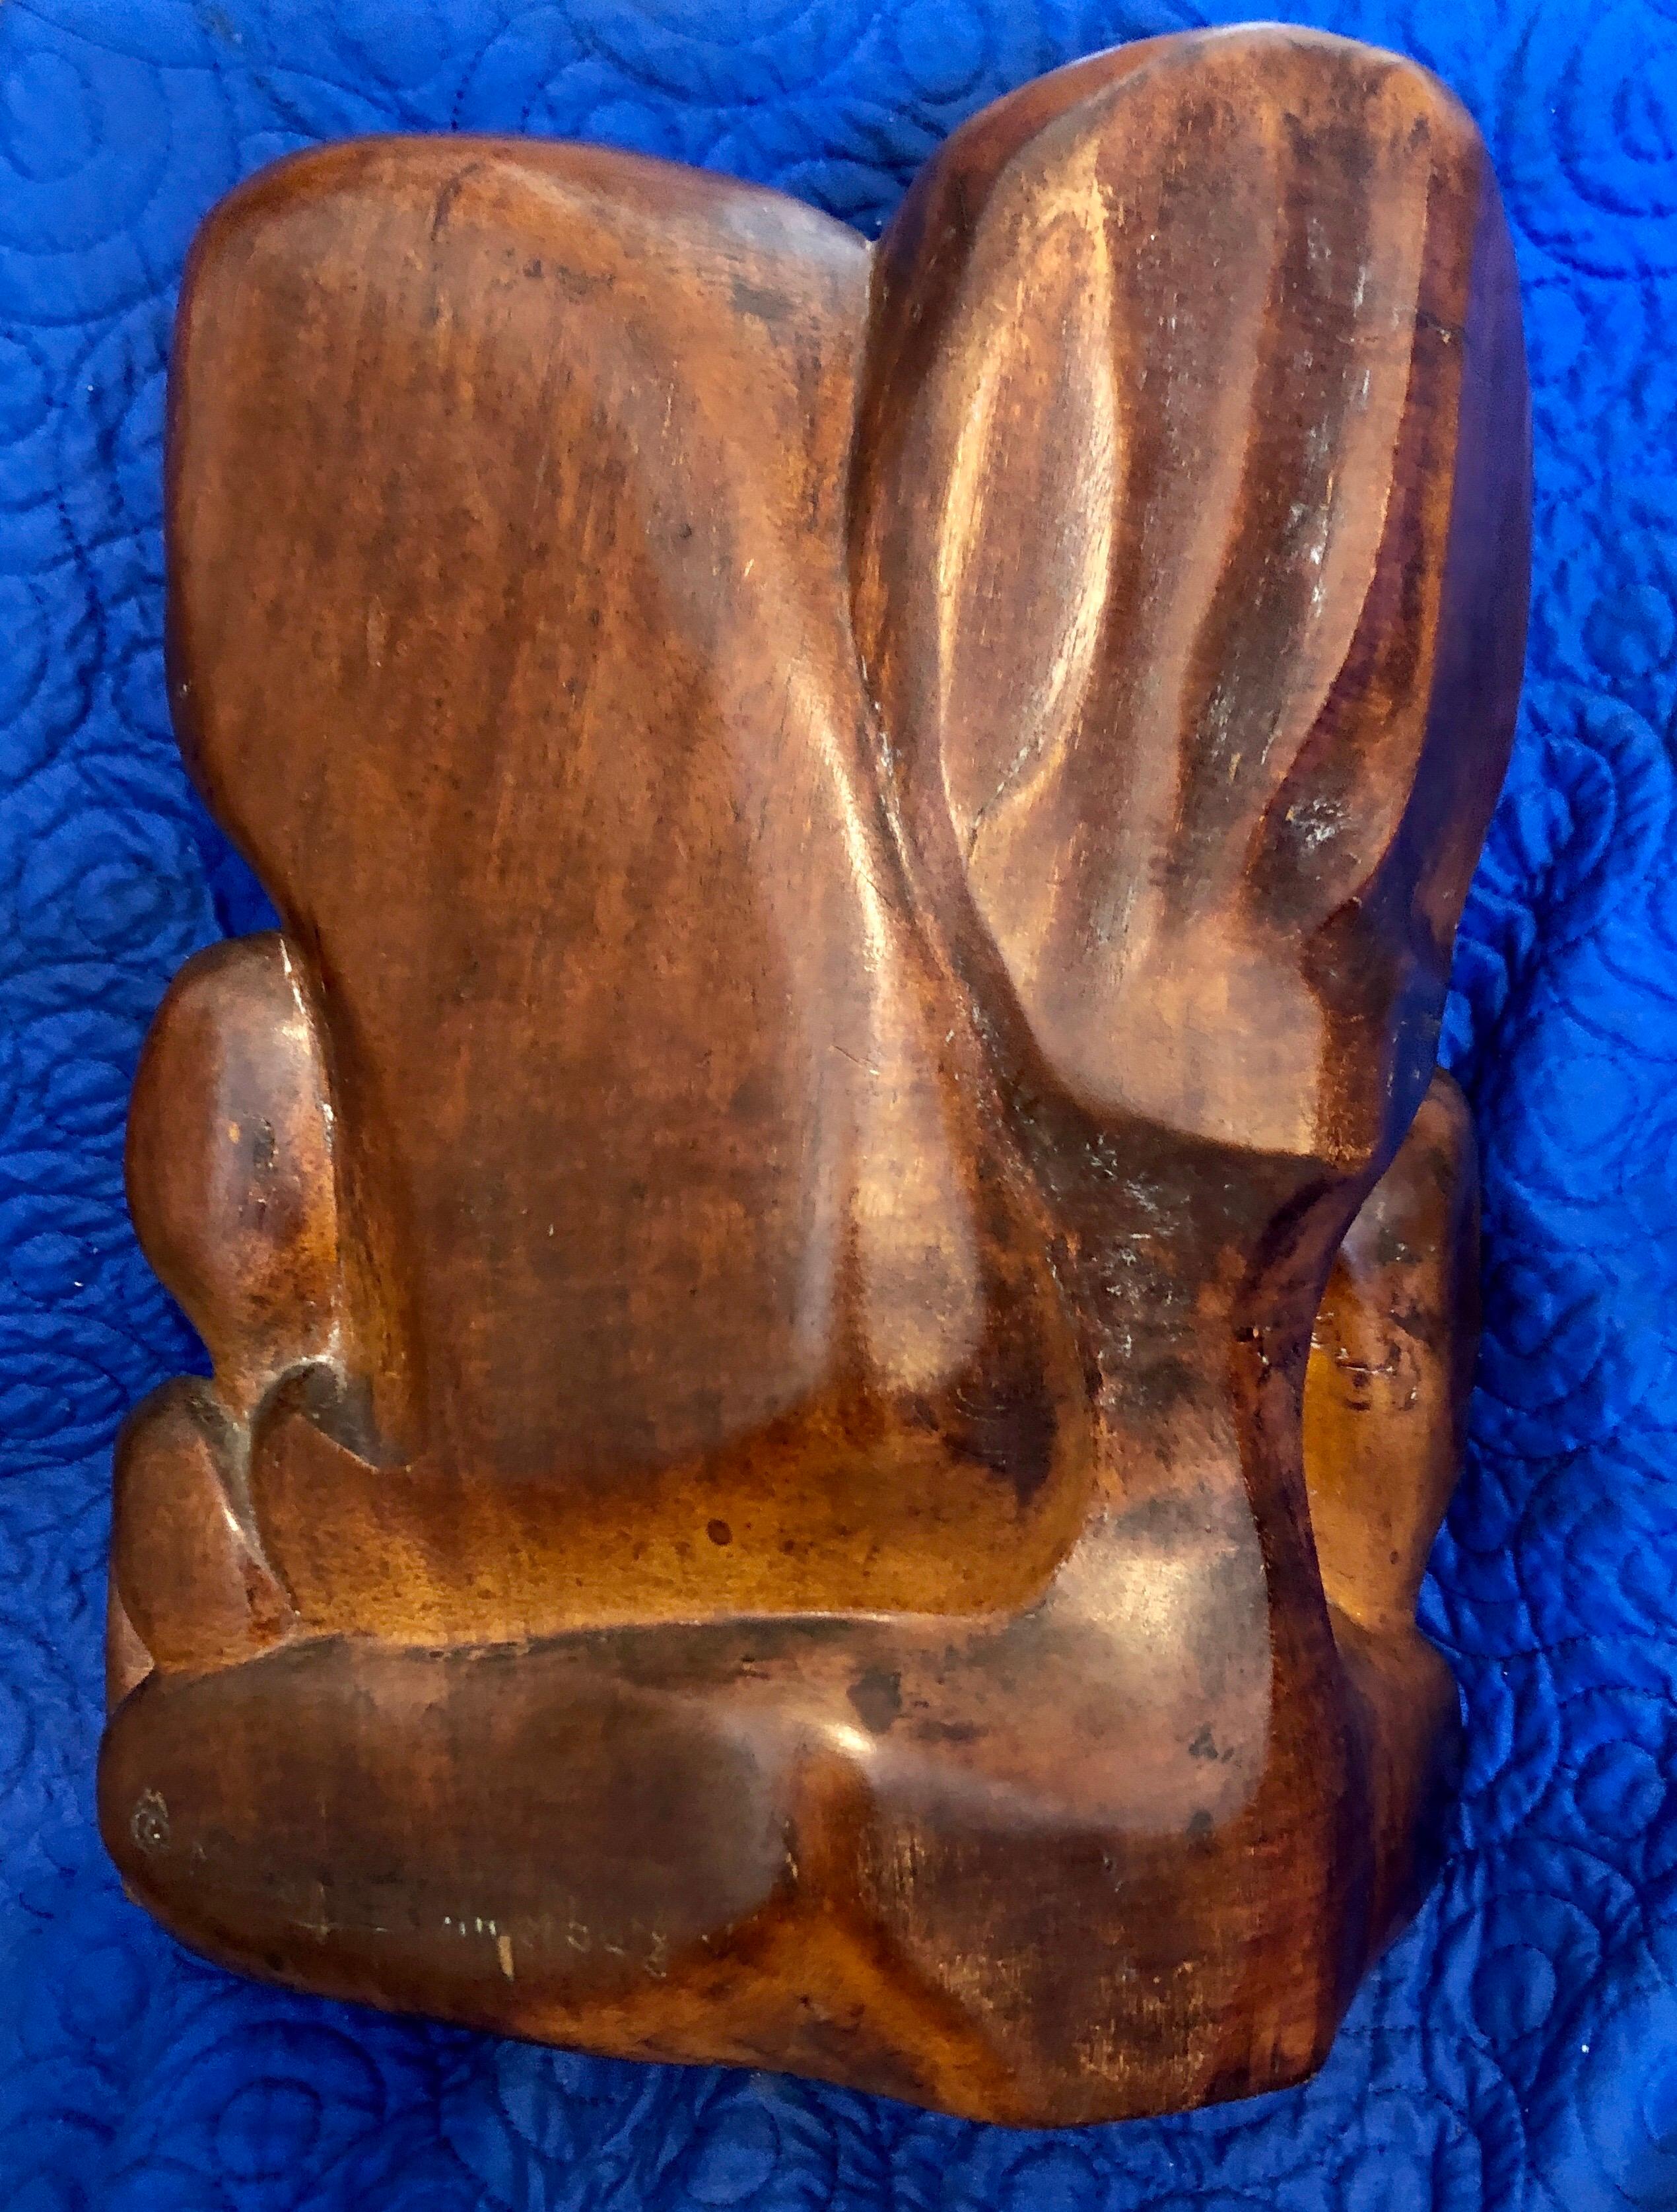 Carved Wood German Expressionist Sculpture Jewish Woman Refugee Artist Judaica - Brown Figurative Sculpture by Miriam Sommerburg